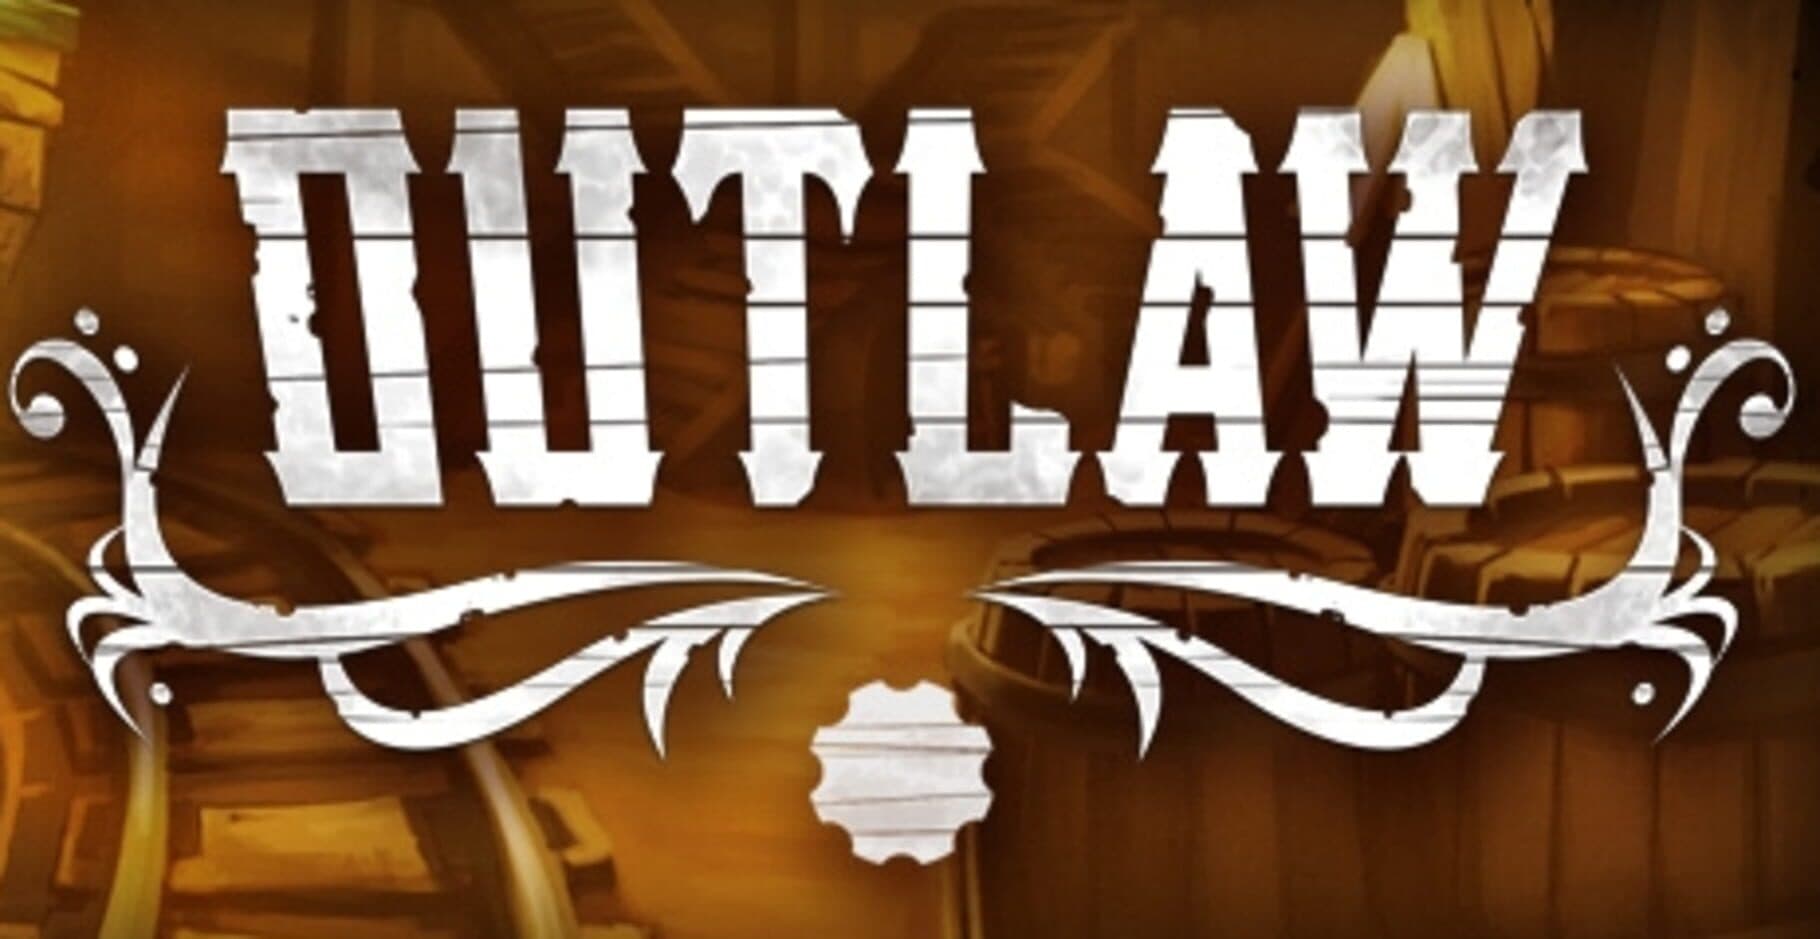 Atari Outlaw cover art